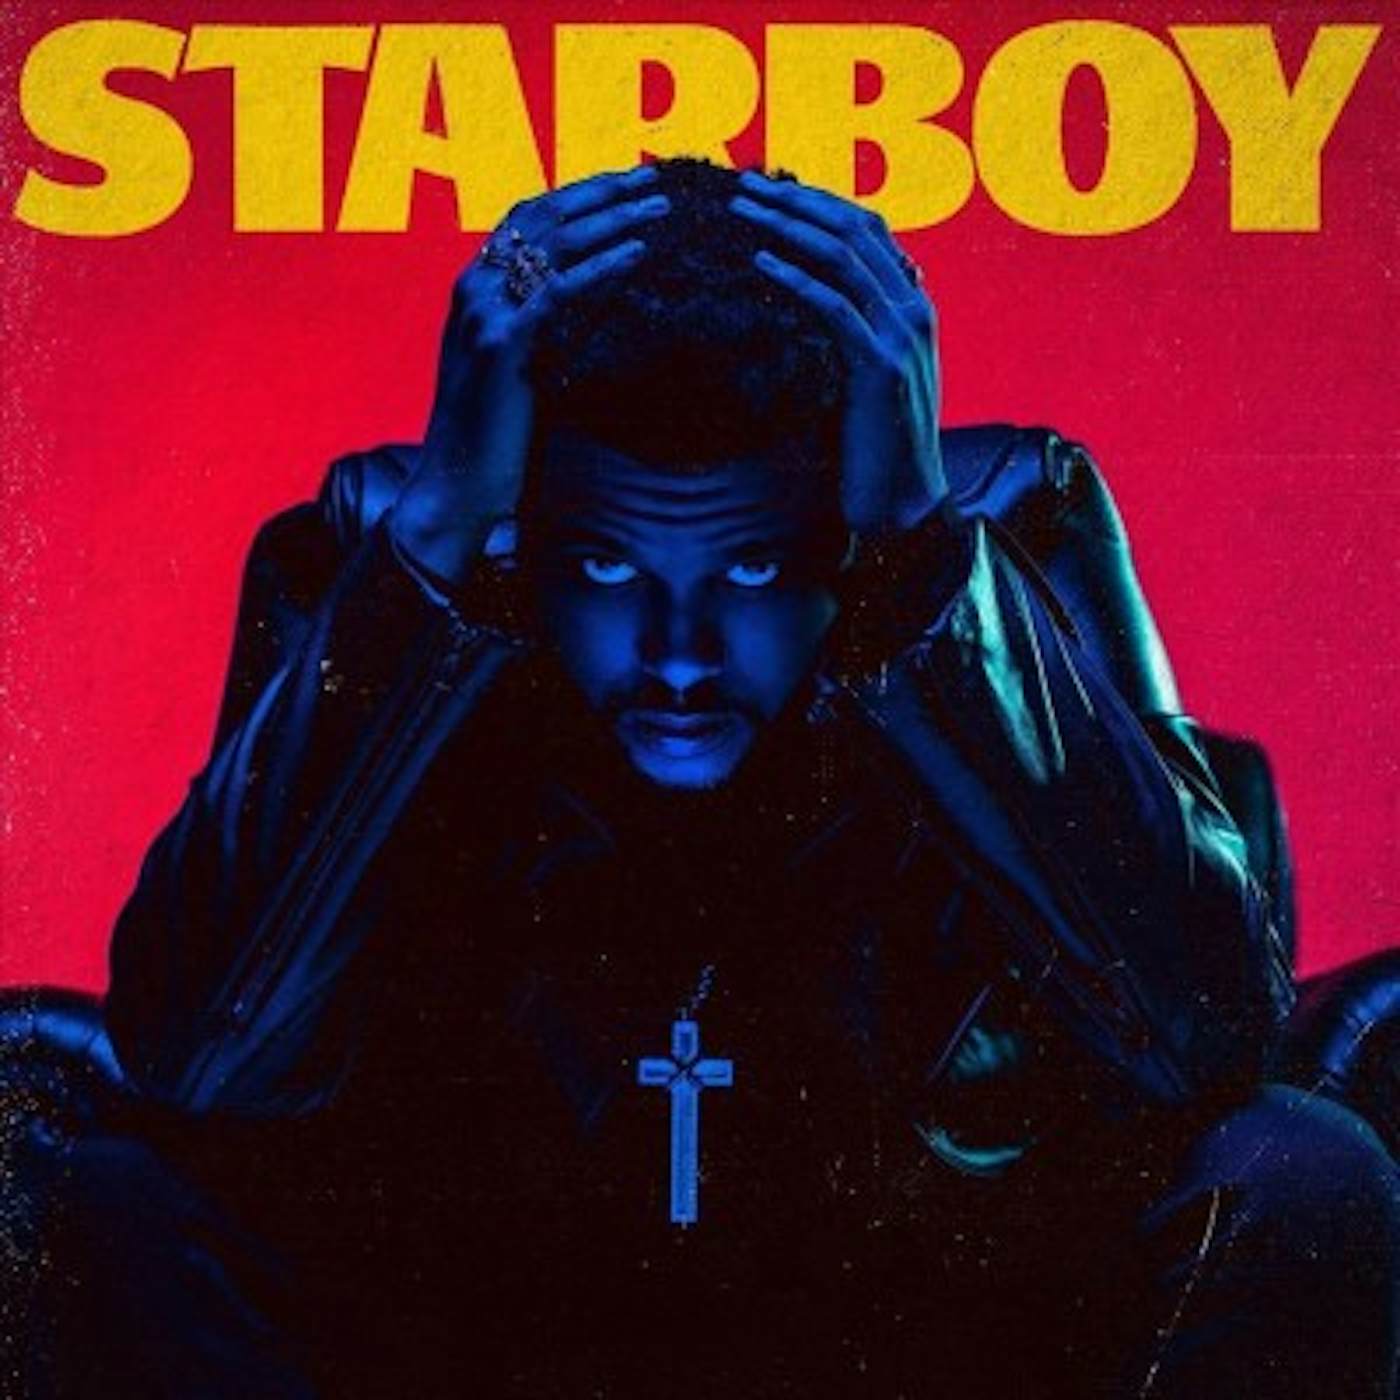 The Weeknd STARBOY (2LP/TRANSLUCENT RED VINYL/GATEFOLD) Vinyl Record